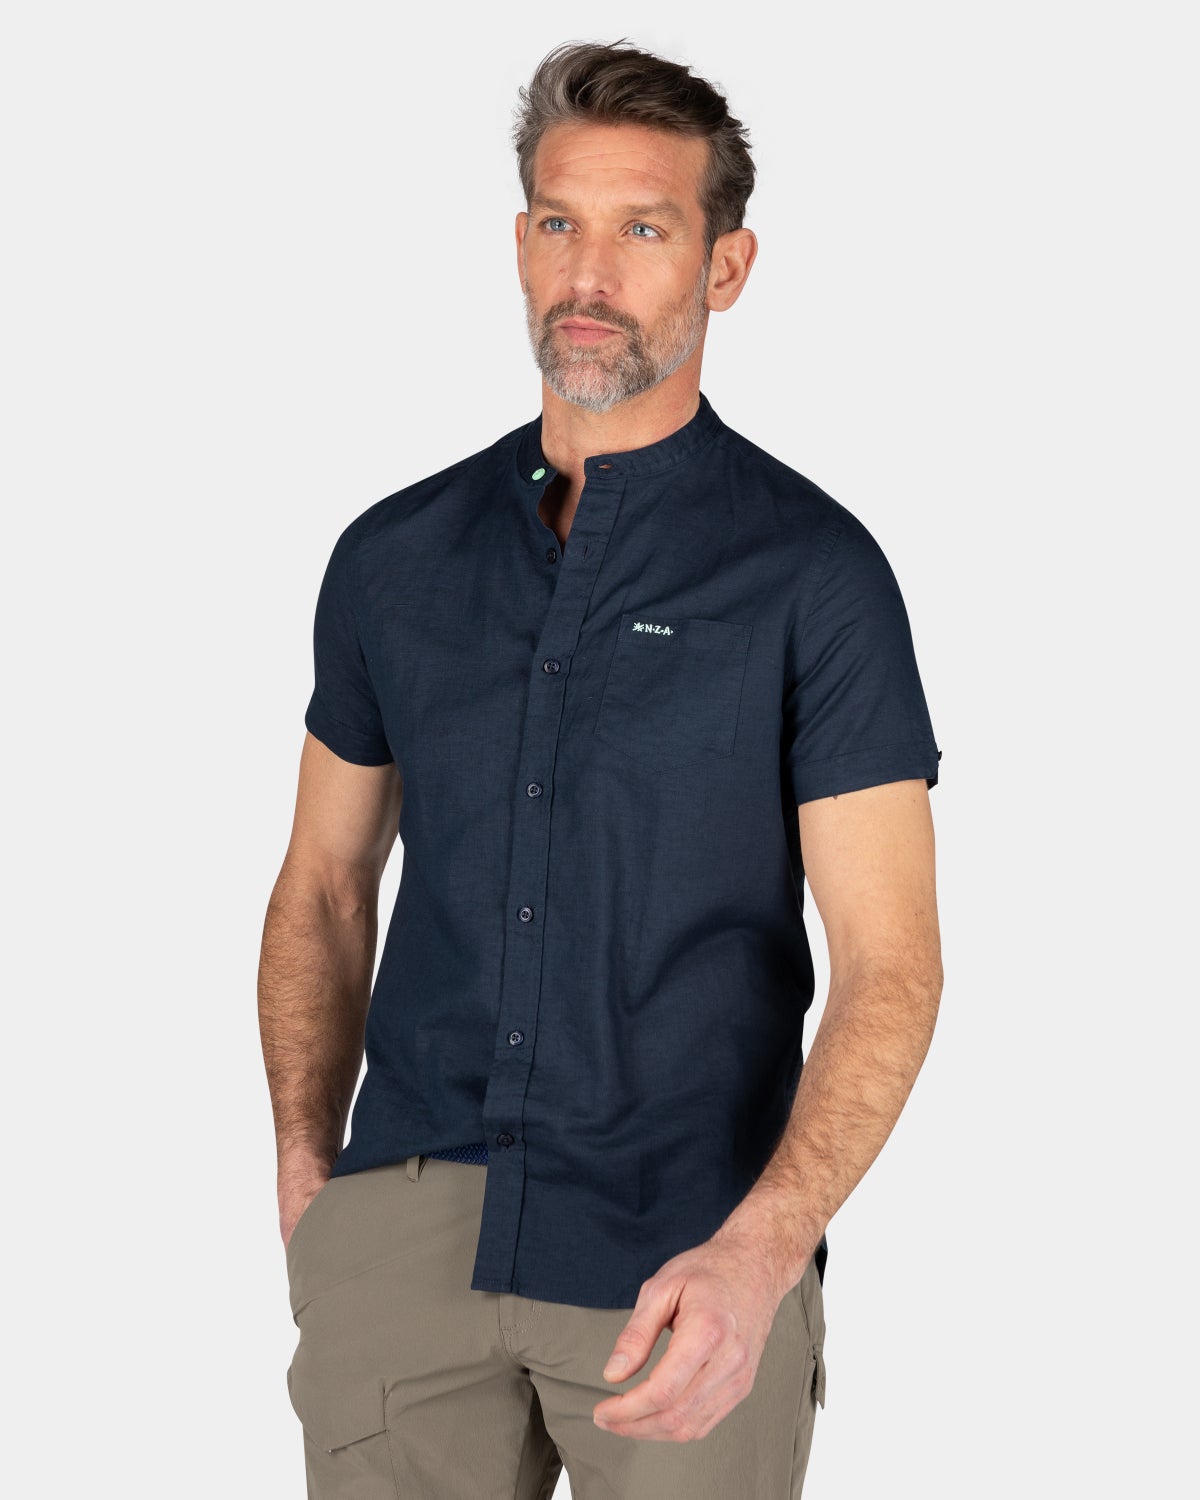 Plain shirt short sleeves - Traditional Navy